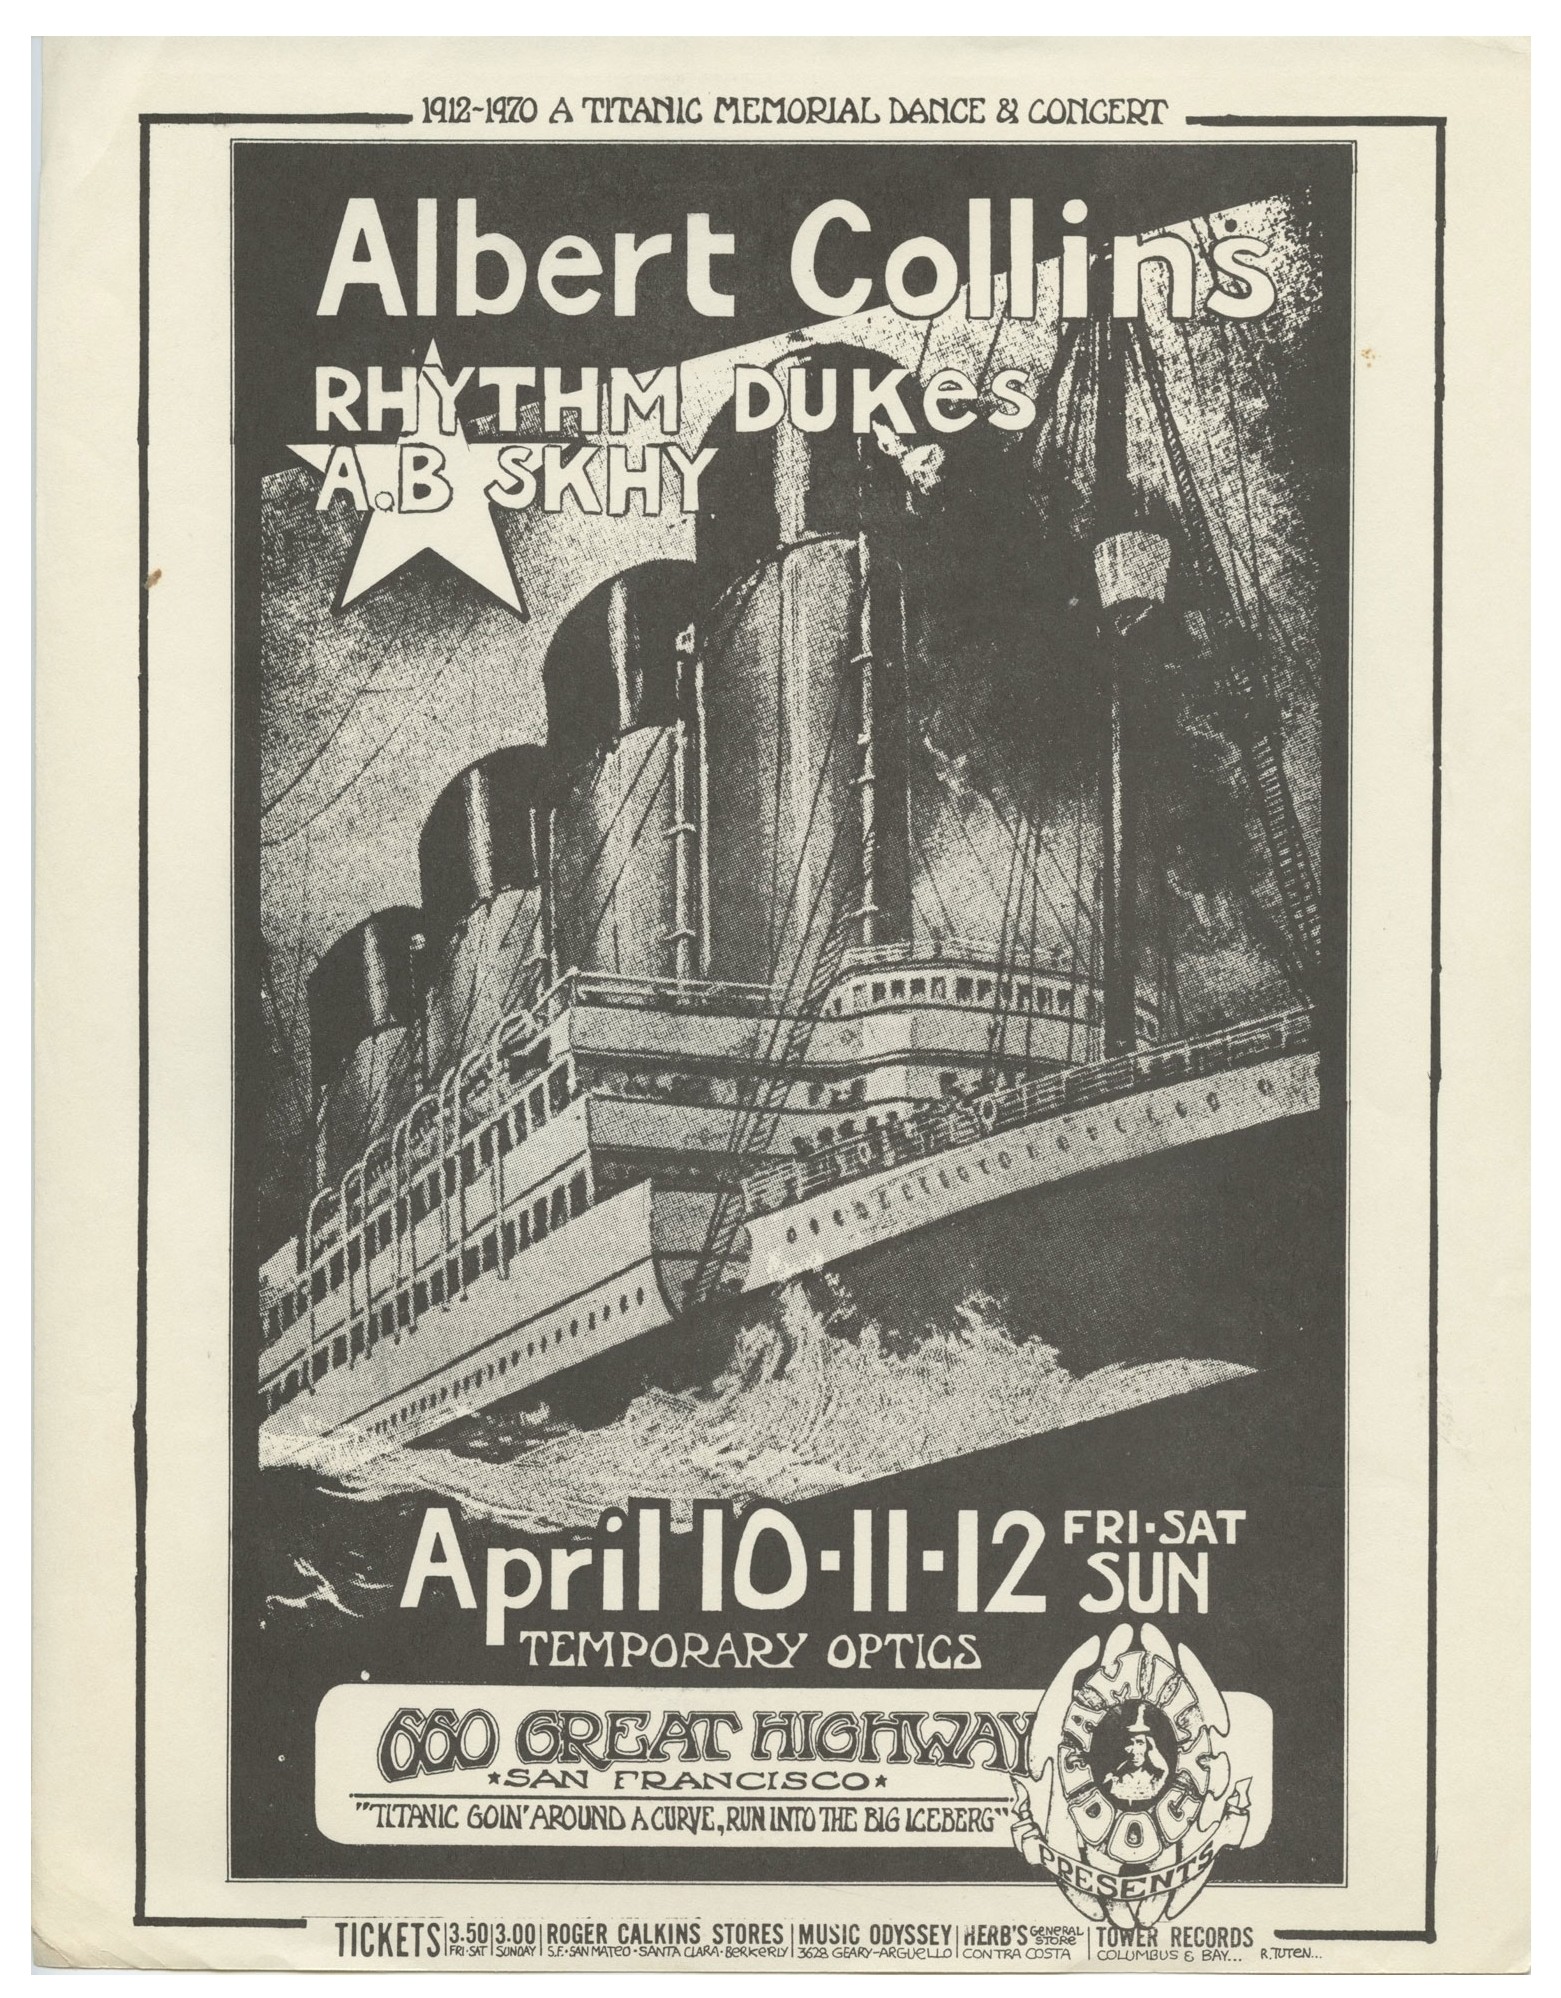 Albert Collins Handbill Titanic Memorial Party 1970 Apr 10 Randy Tuten